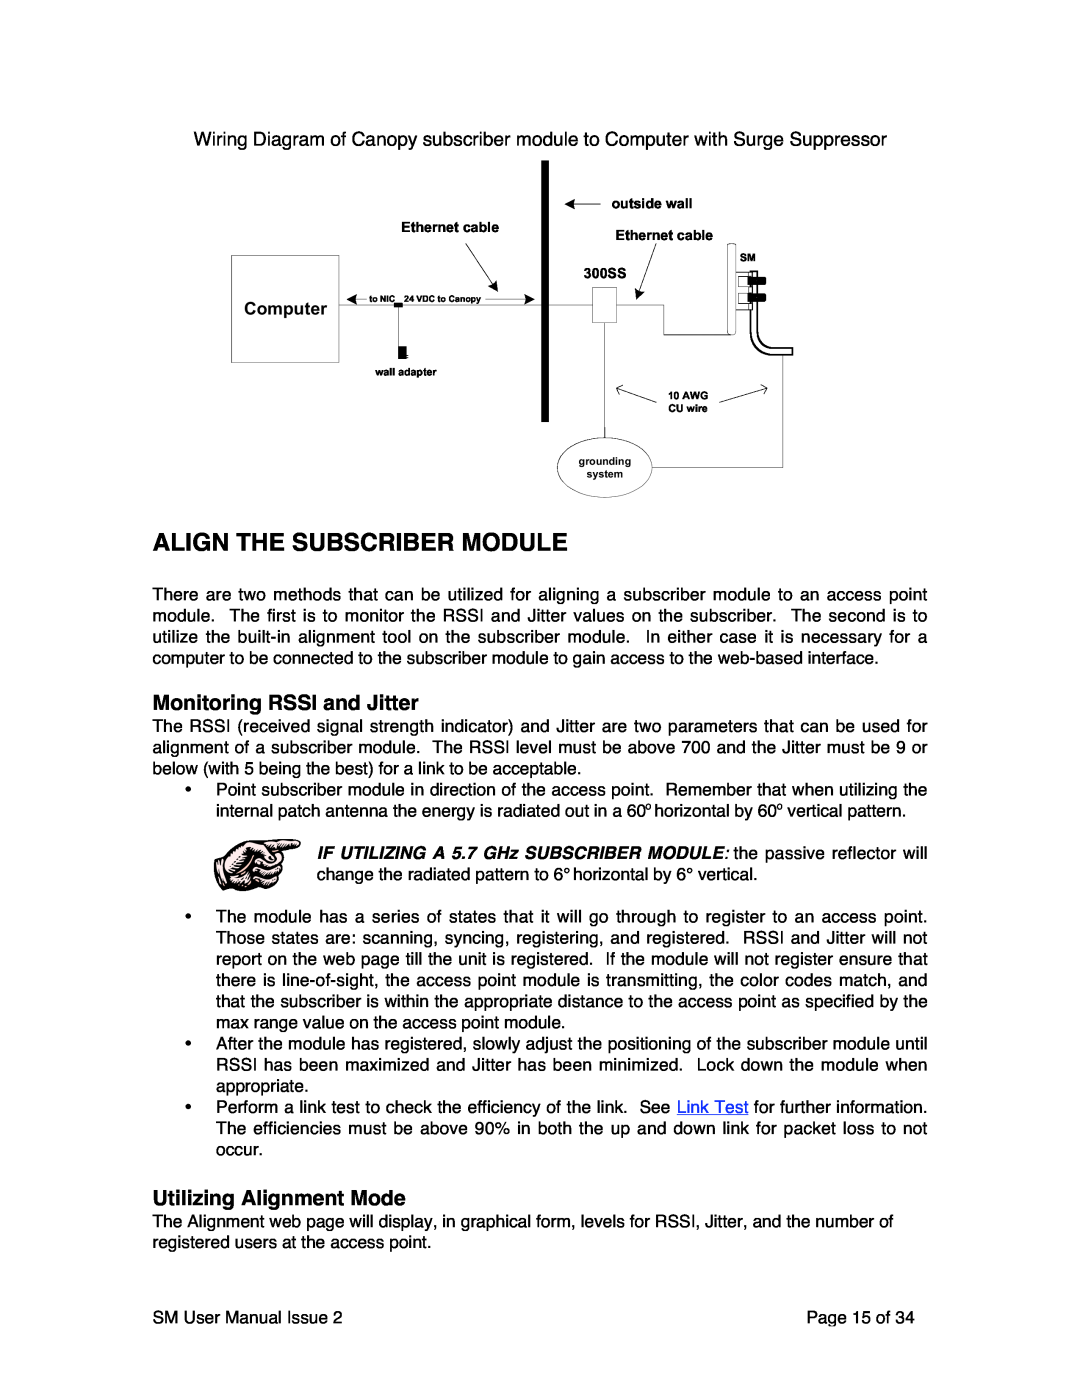 Motorola SM02-UG-en user manual Align The Subscriber Module, Monitoring RSSI and Jitter, Utilizing Alignment Mode, Computer 